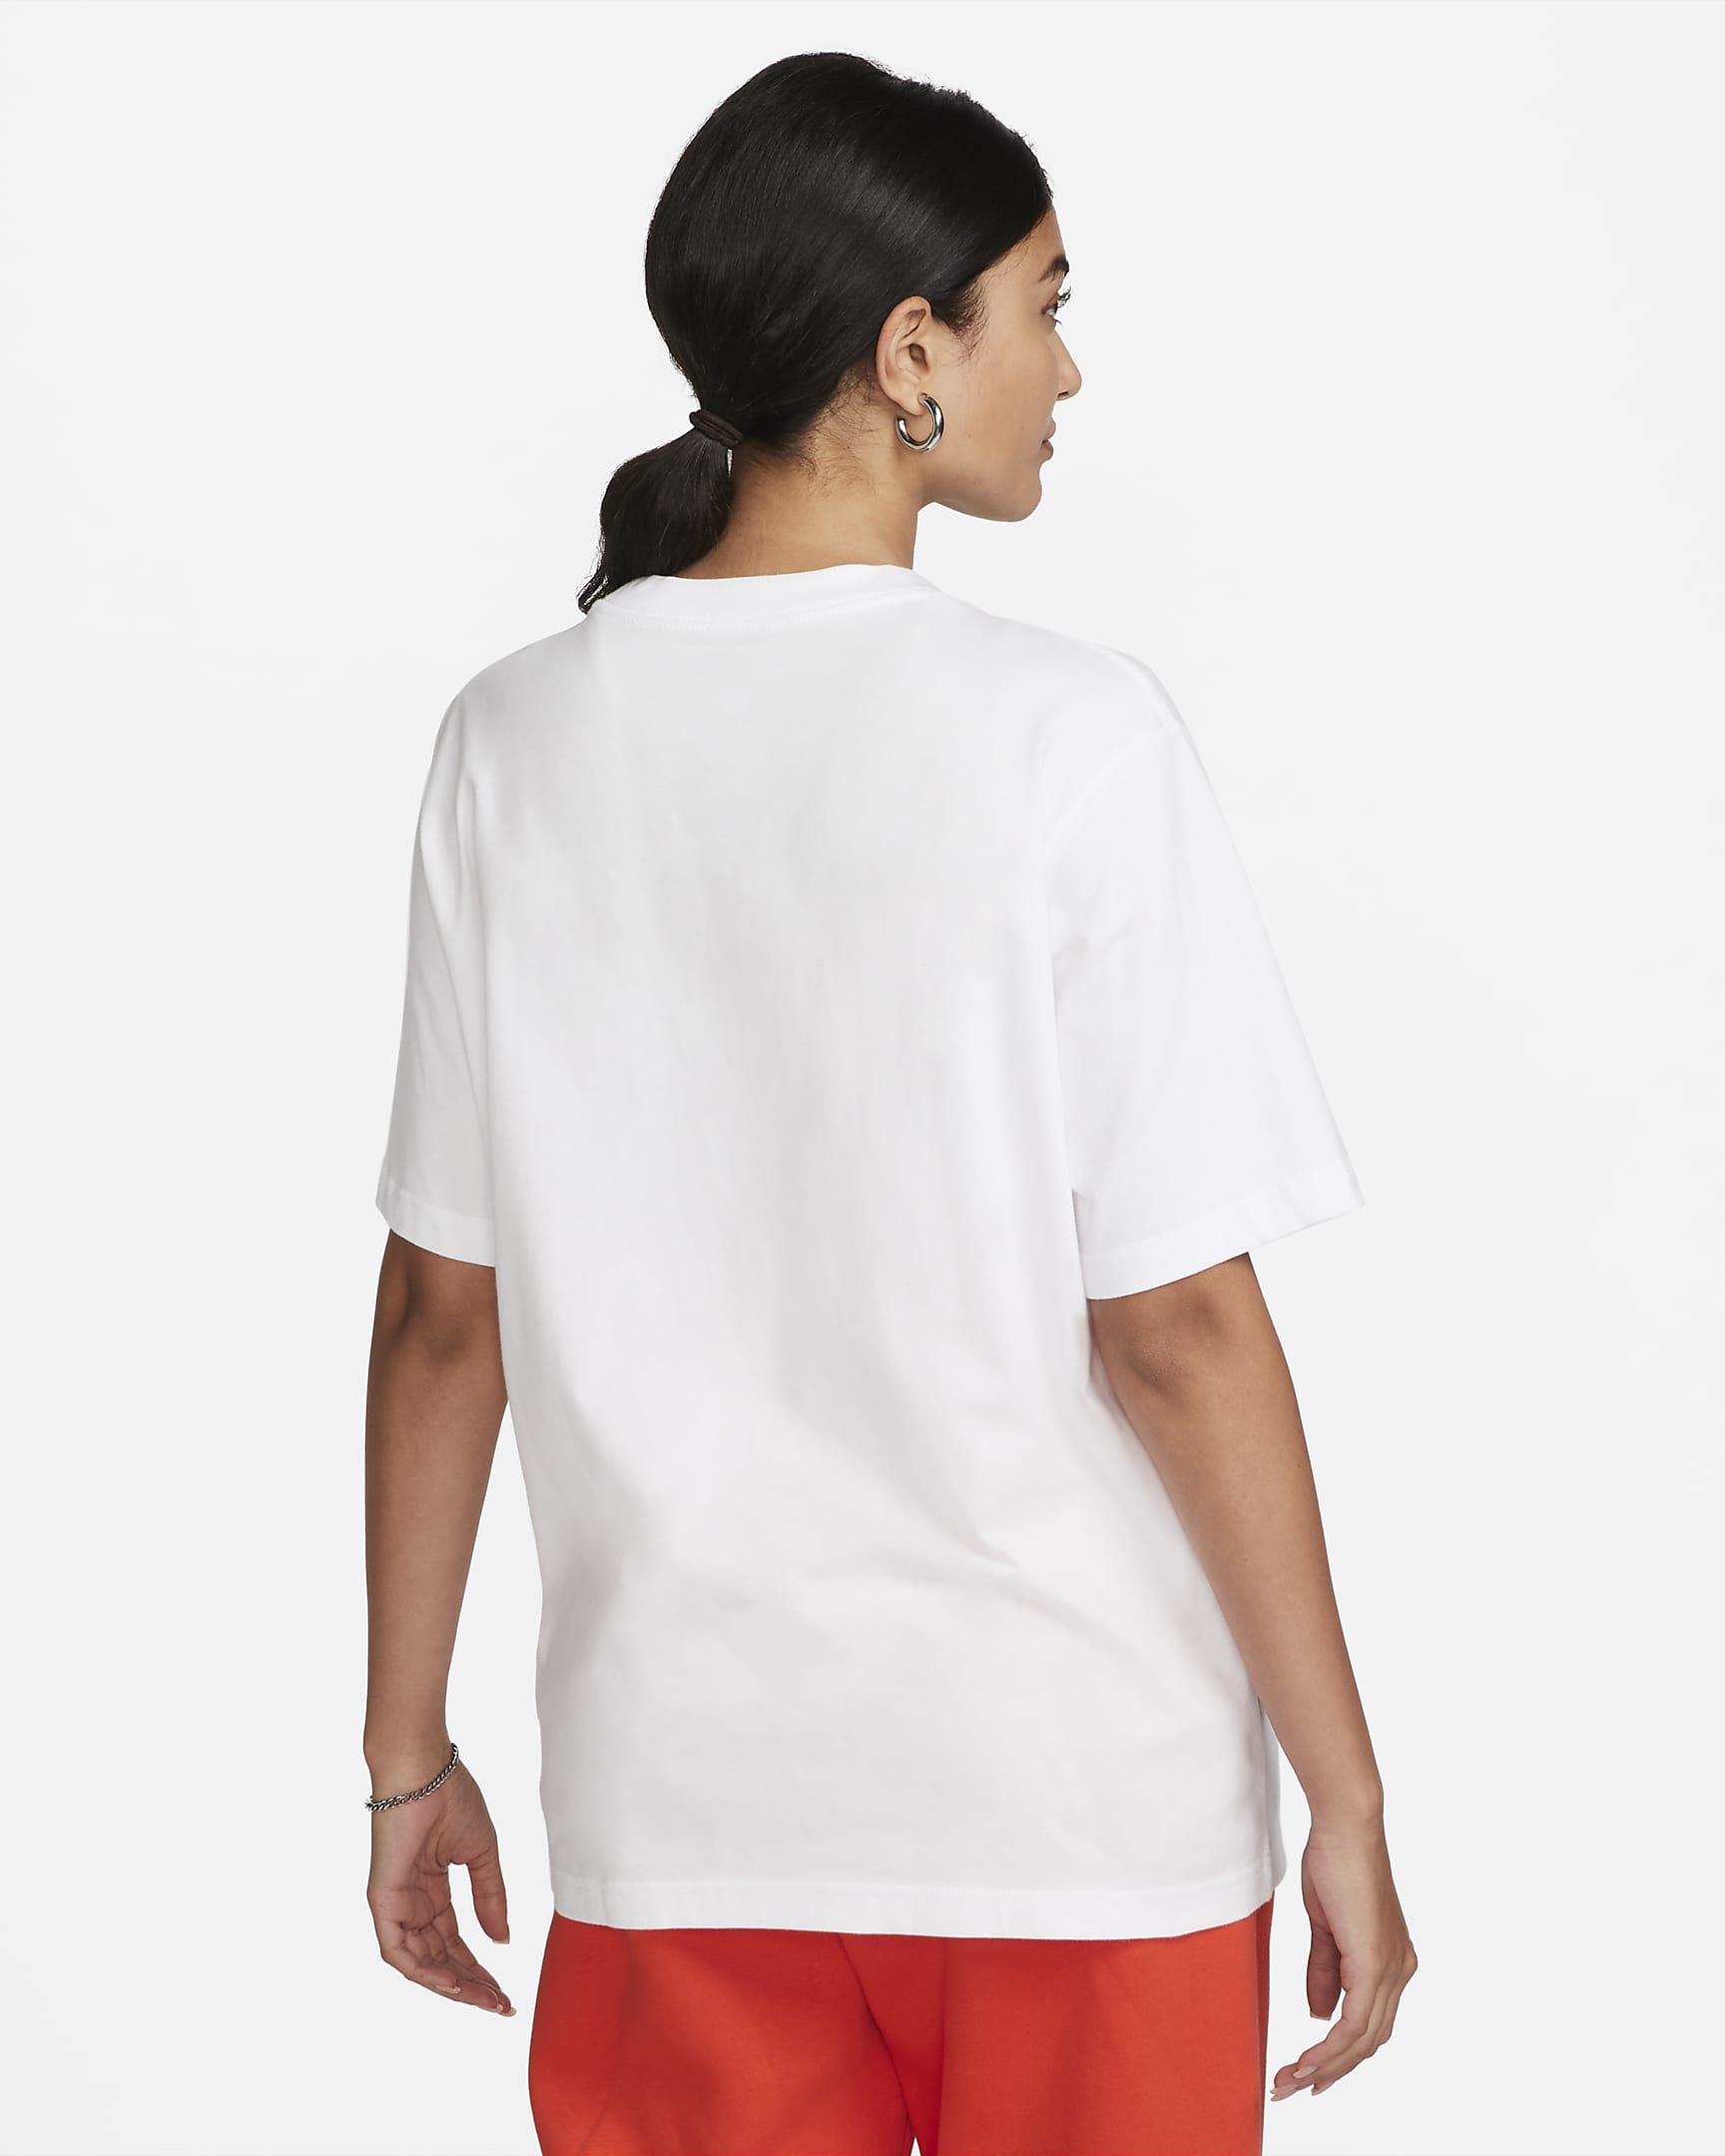 Nike Sportswear Essential Women's T-Shirt - White/Black